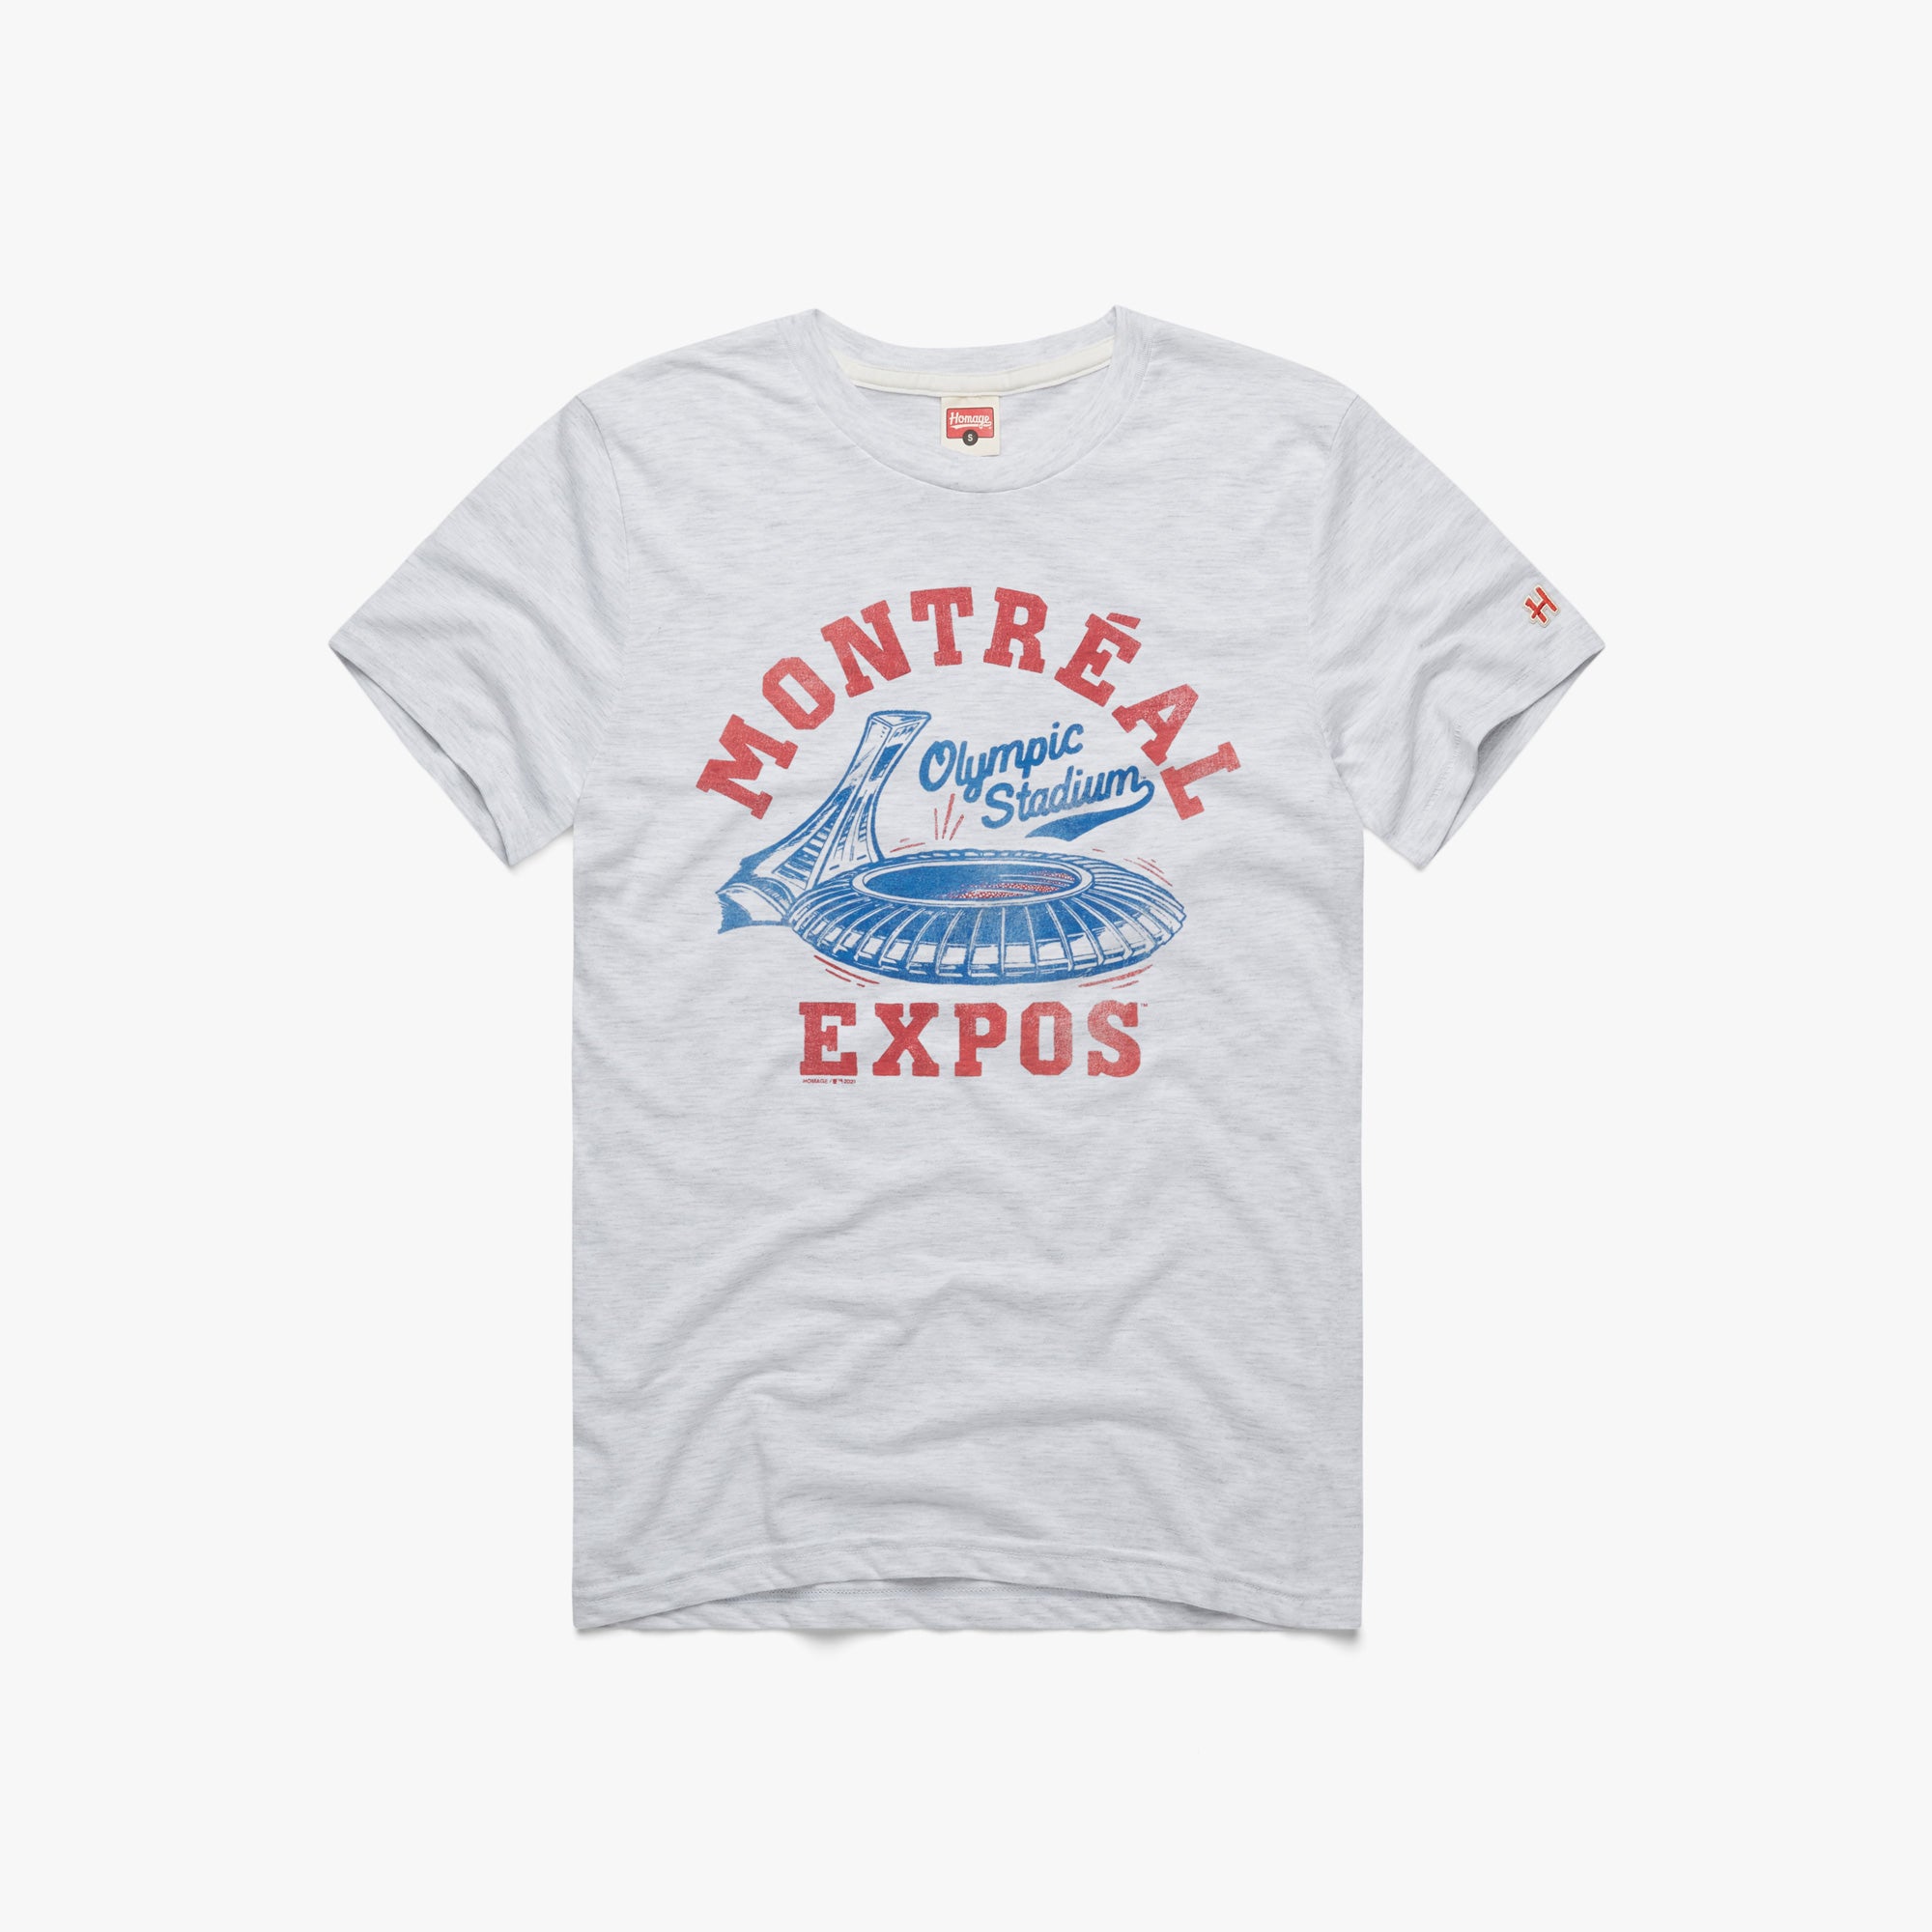 Buy Montreal Expos Merchandise